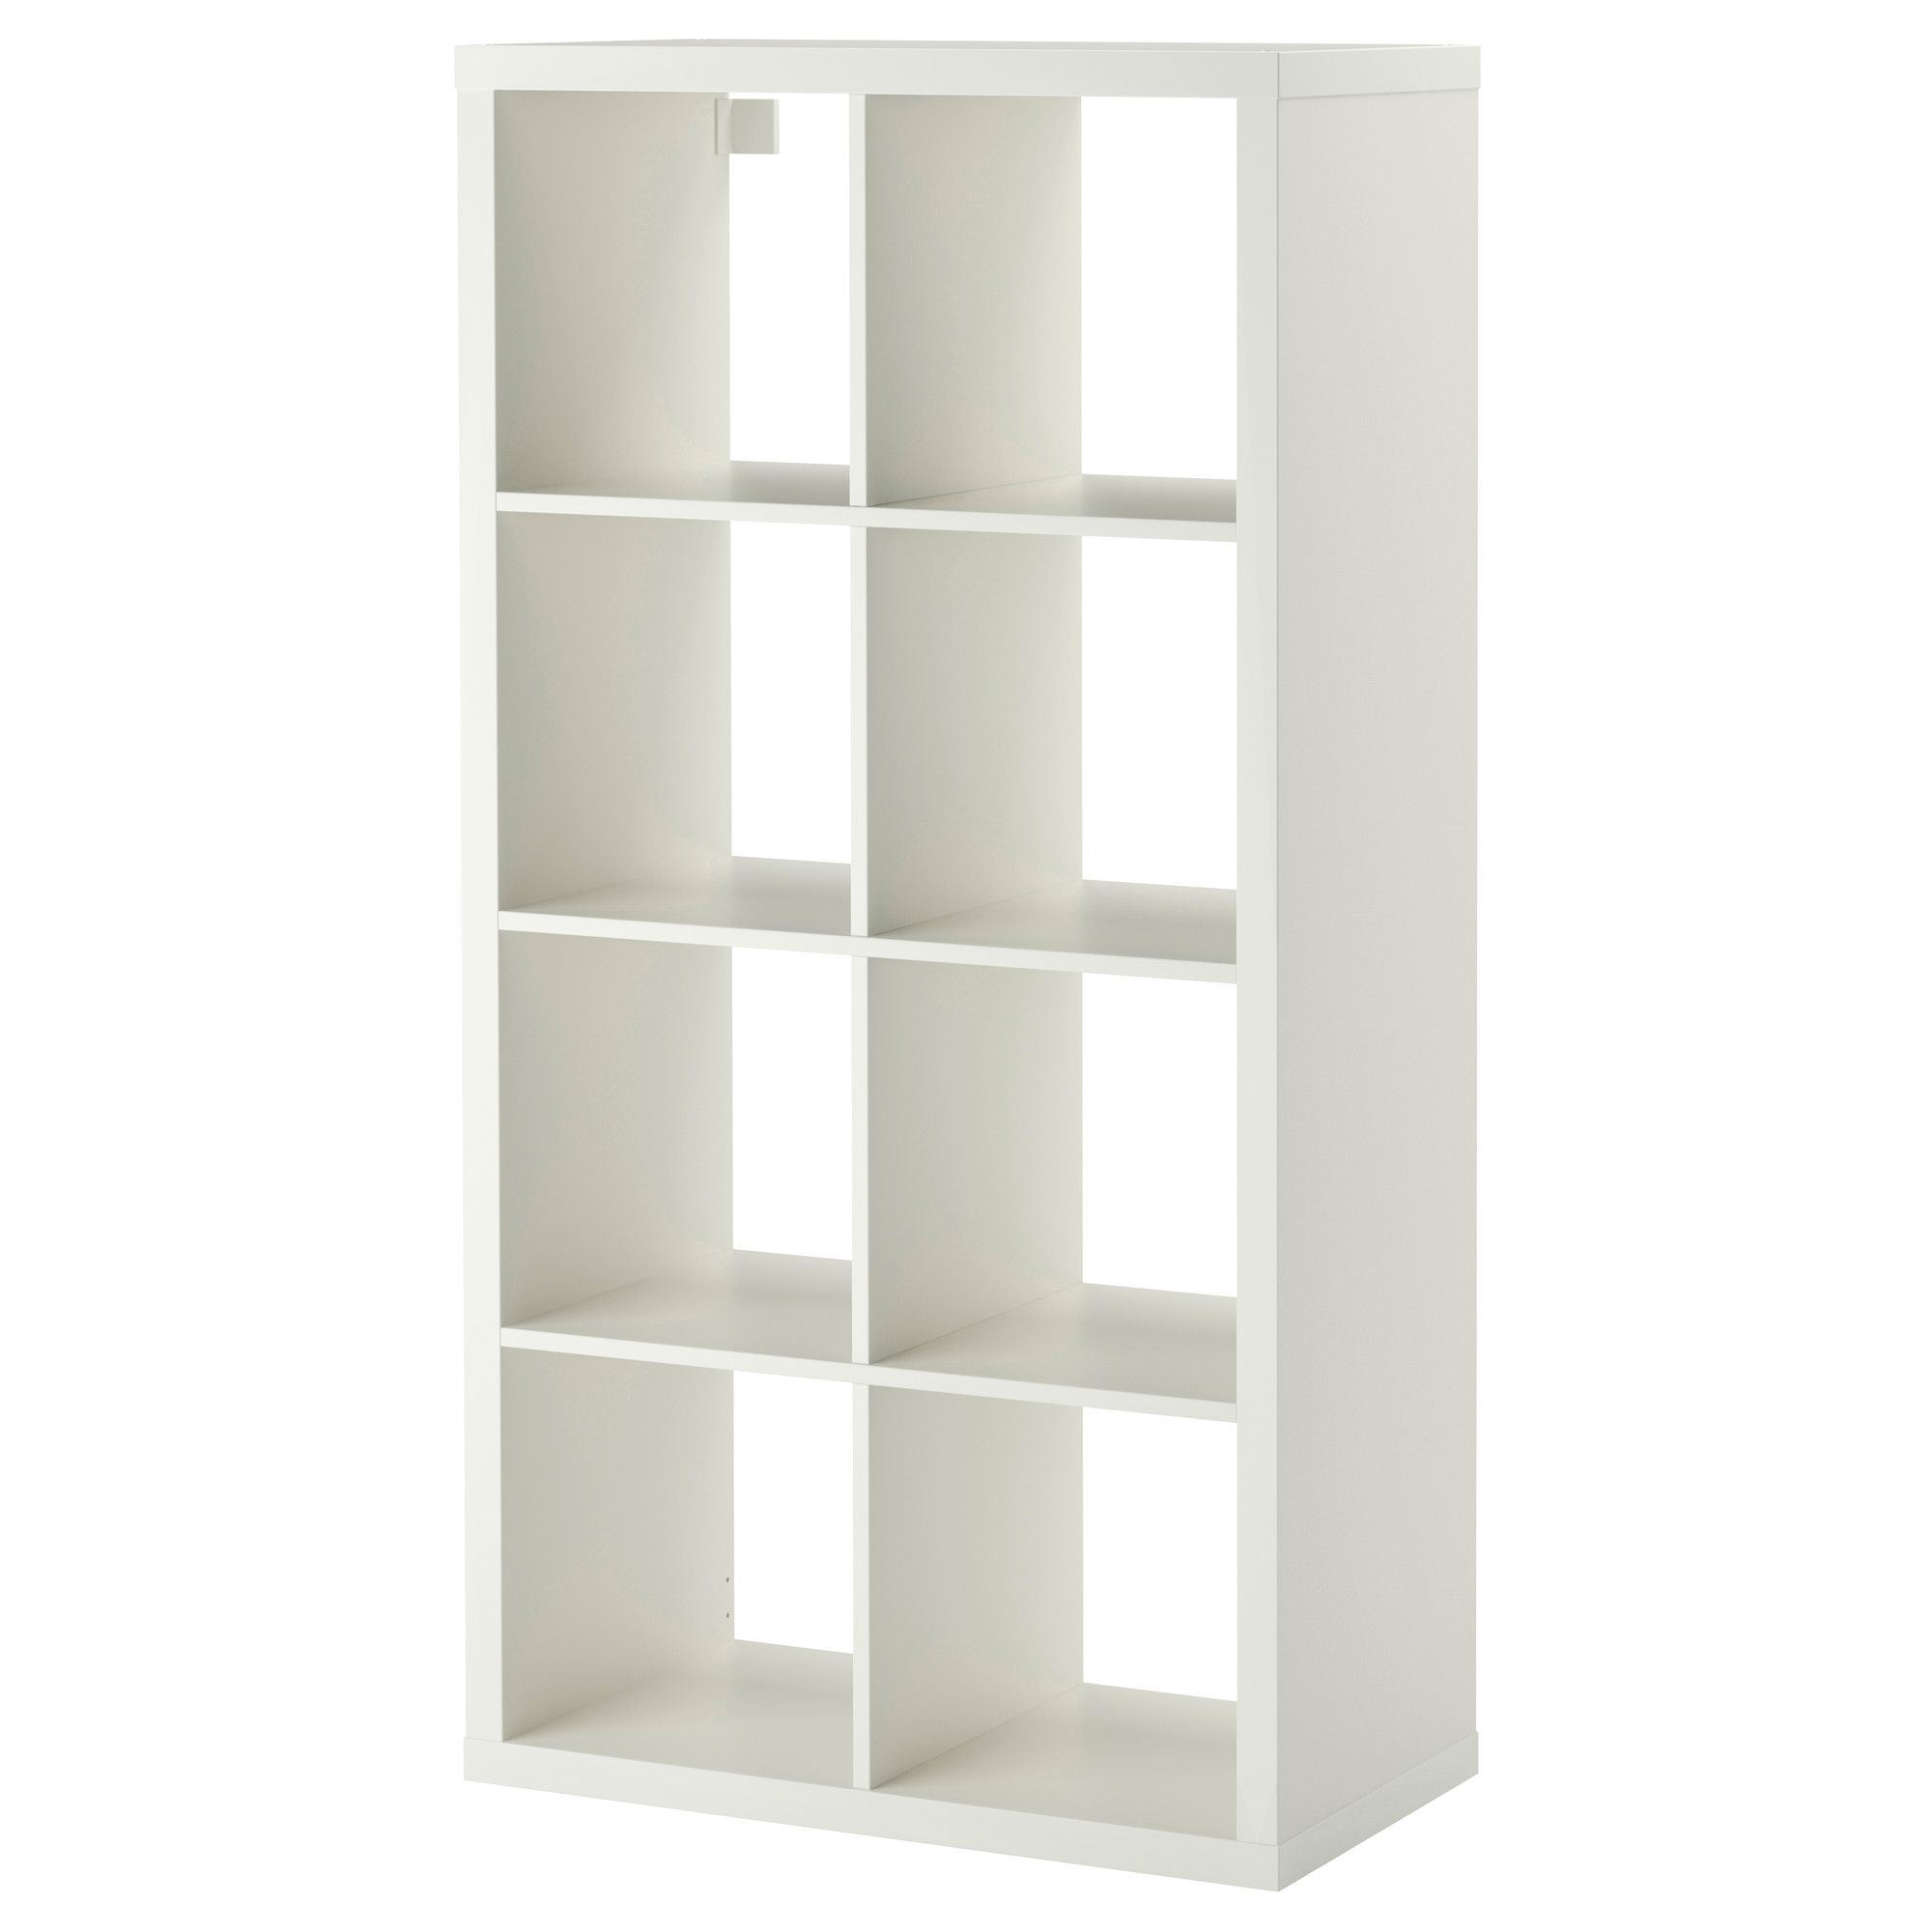 white shelf kallax shelf unit - white - ikea JJFLYKA